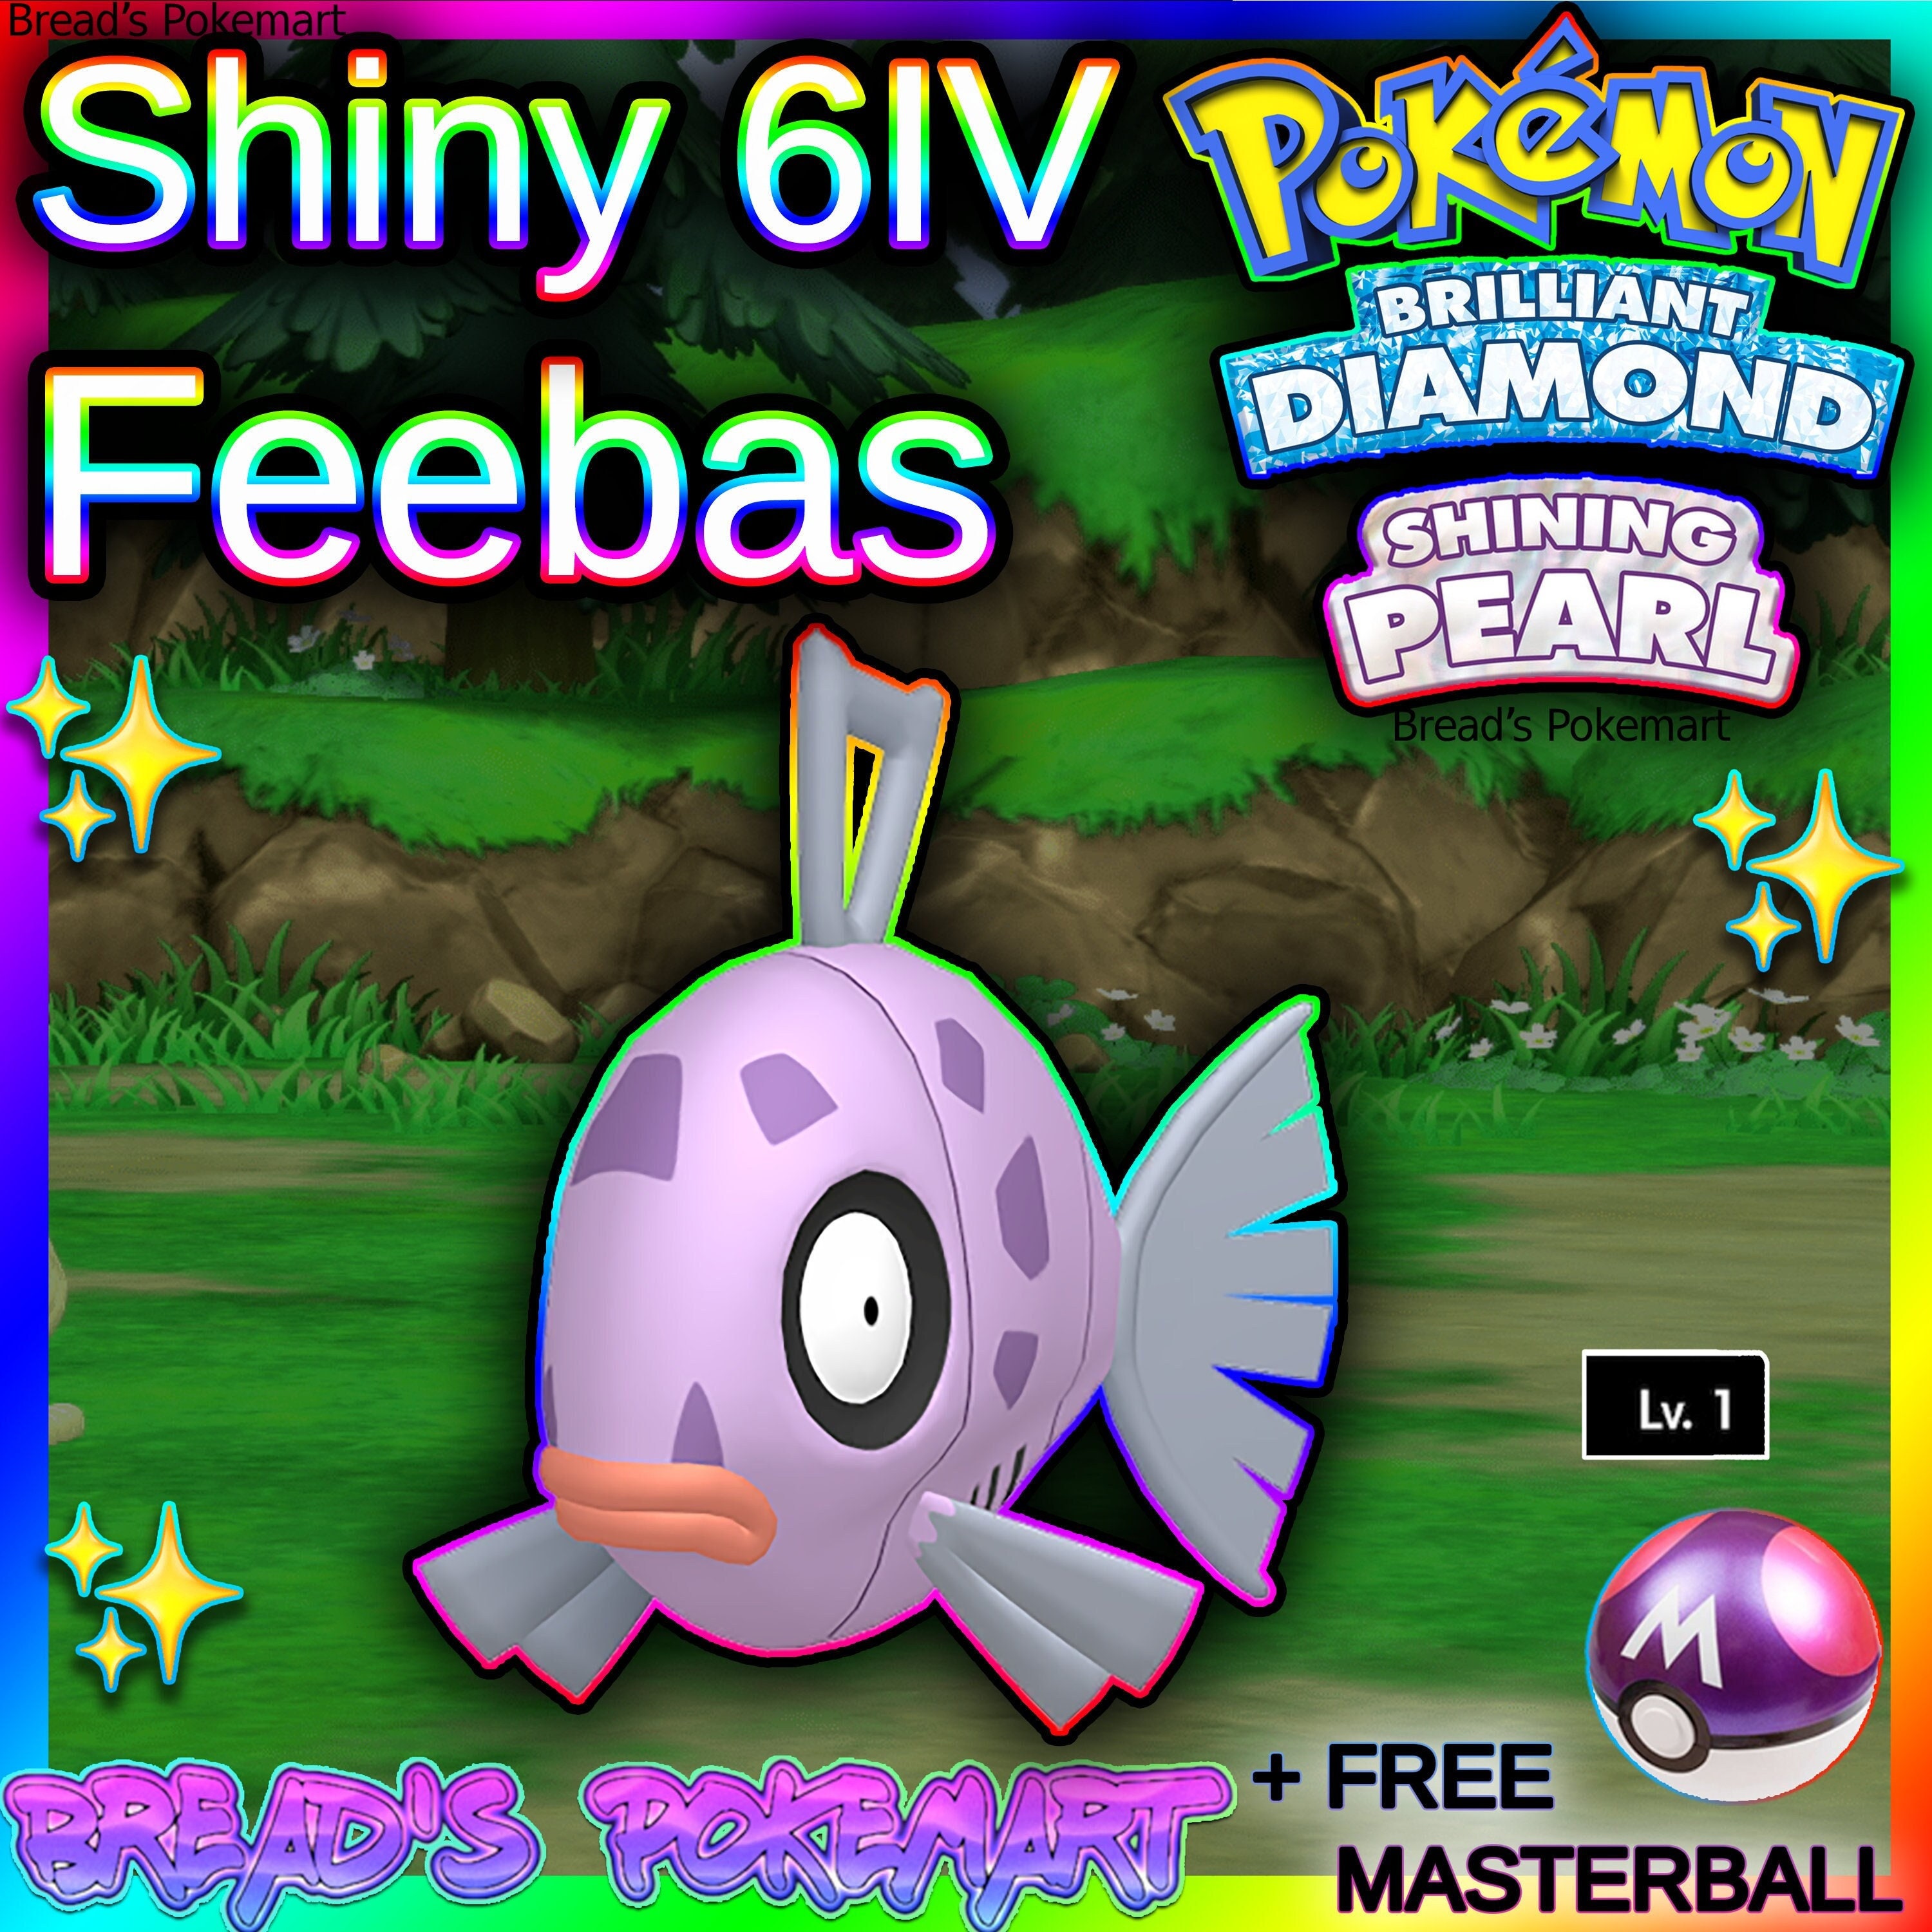 Pokemon Brilliant Diamond & Shining Pearl // 1x Shiny CUSTOM 6IV Egg // Fast Trade // lv1 Shiny Custom Eggs ready to raise!